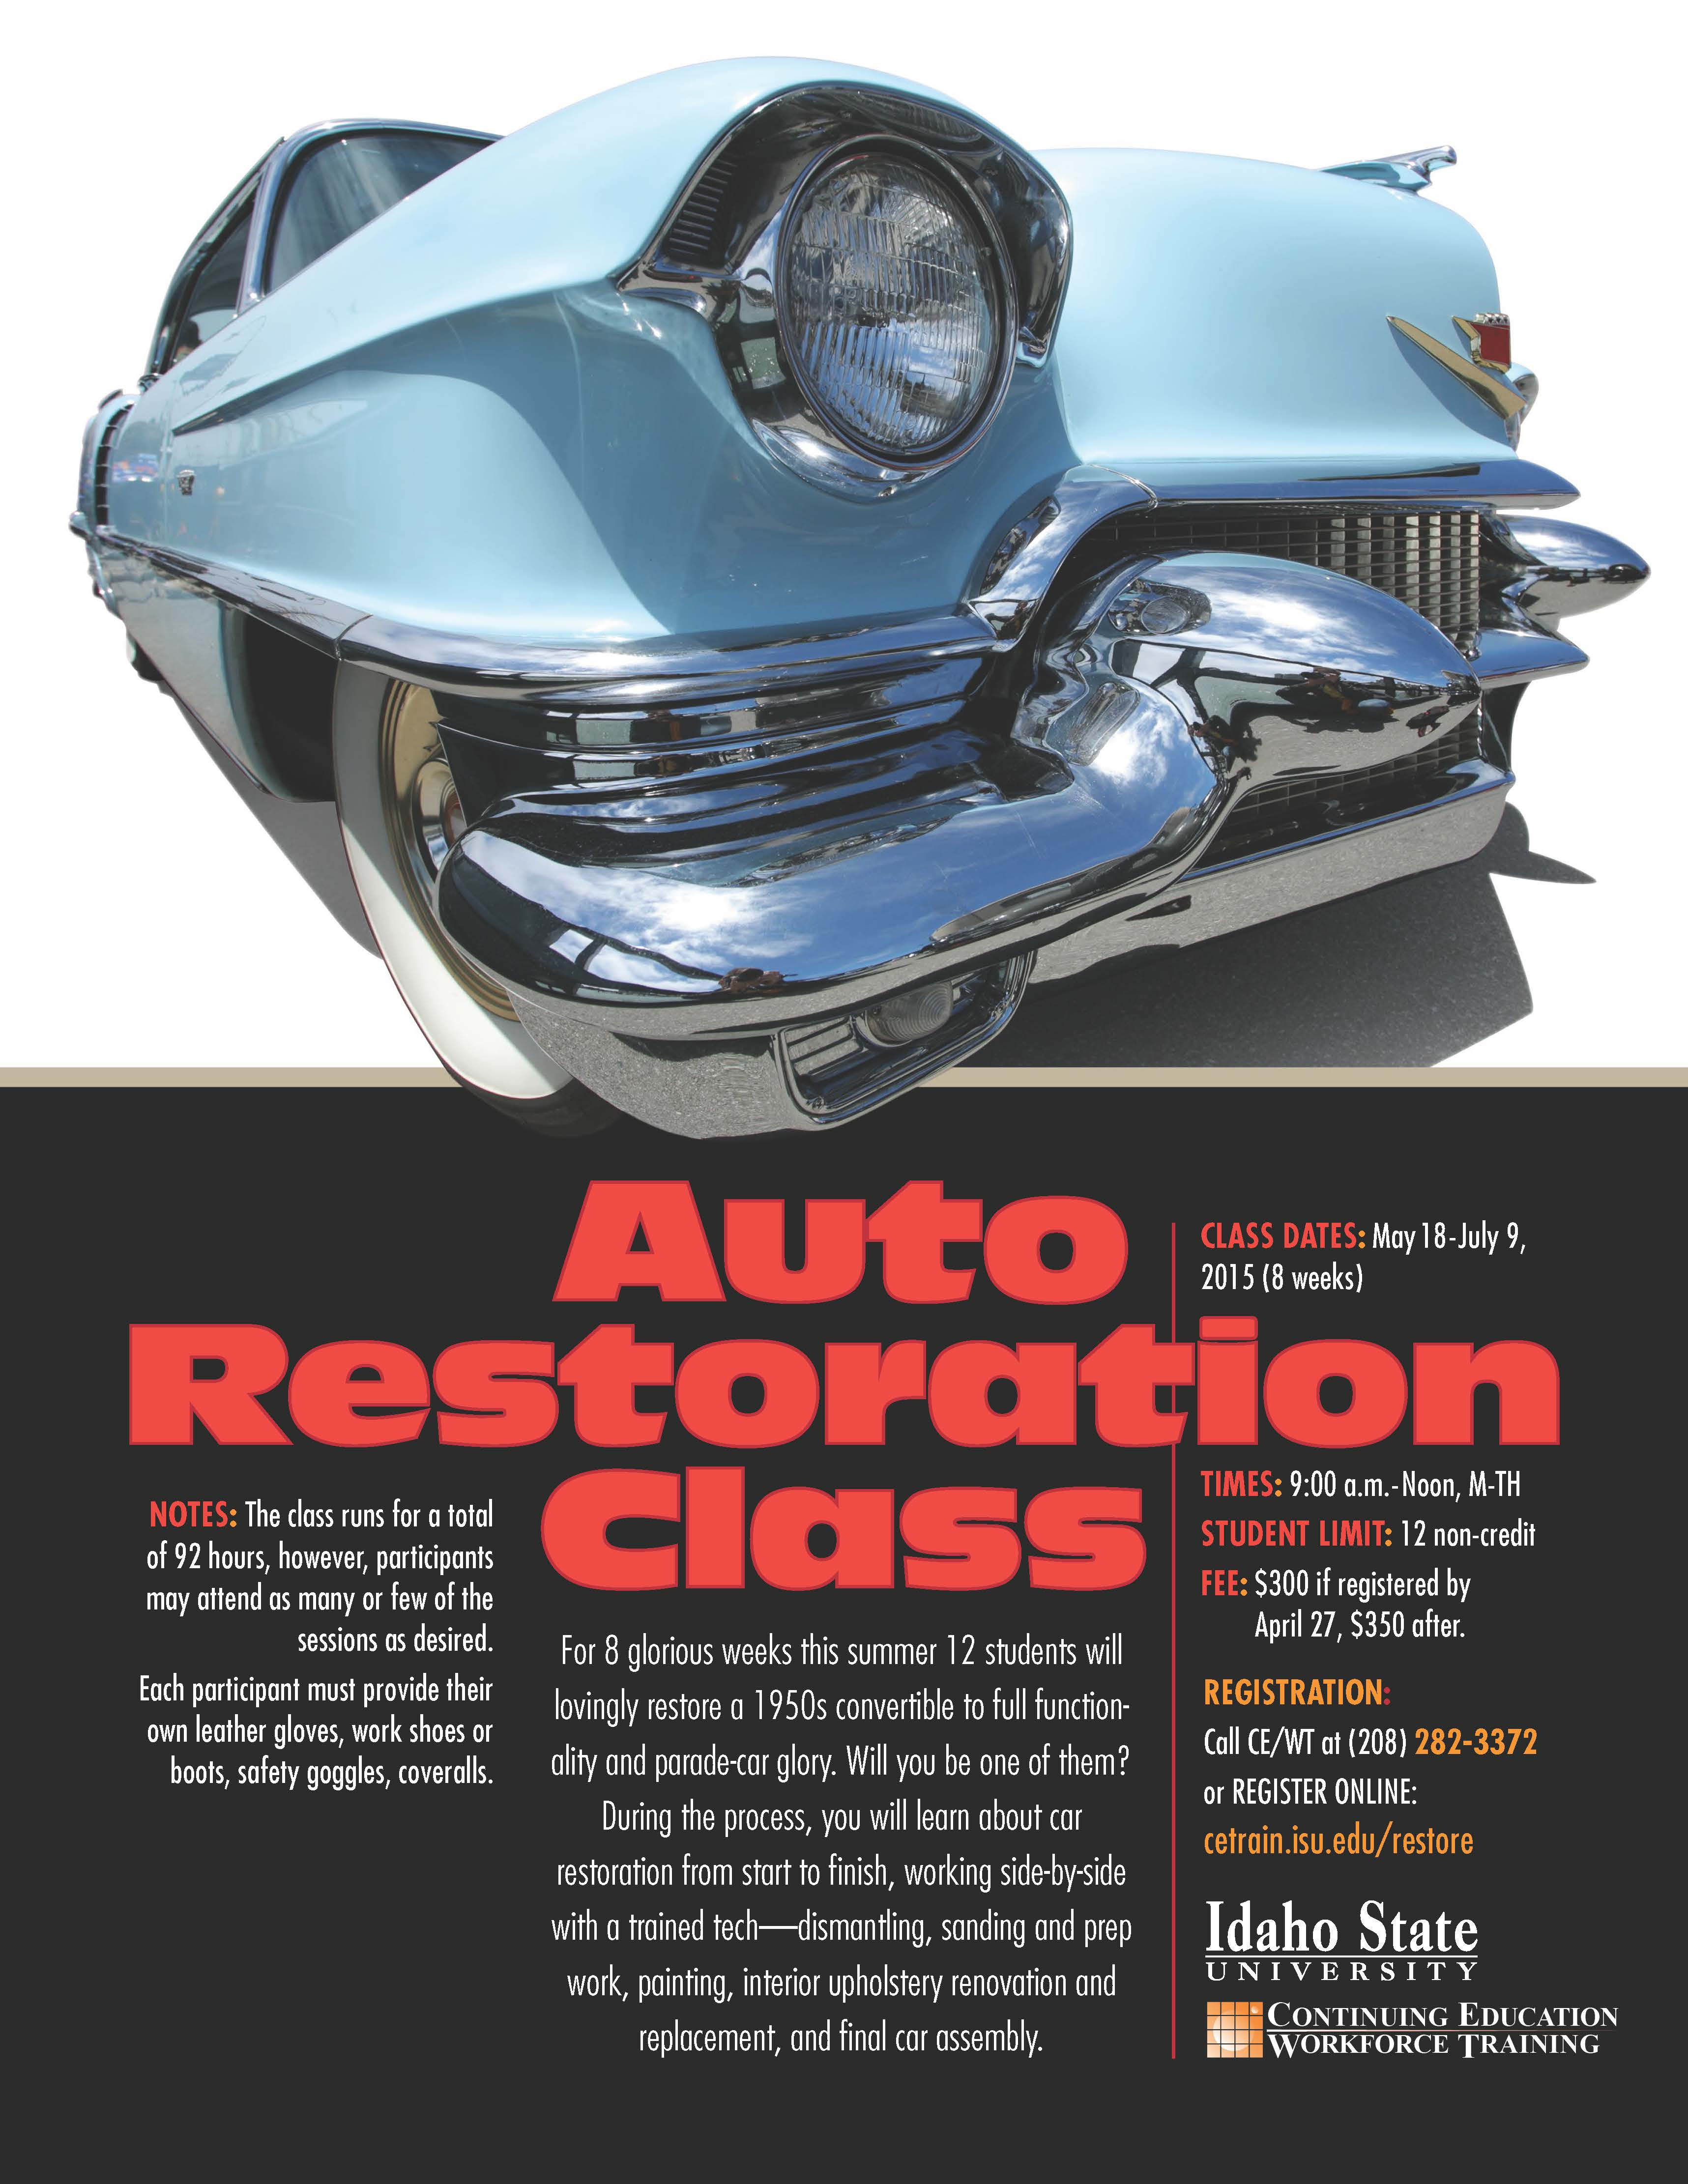 Auto Restoration Class Isu Continuing Education And Workforce Training